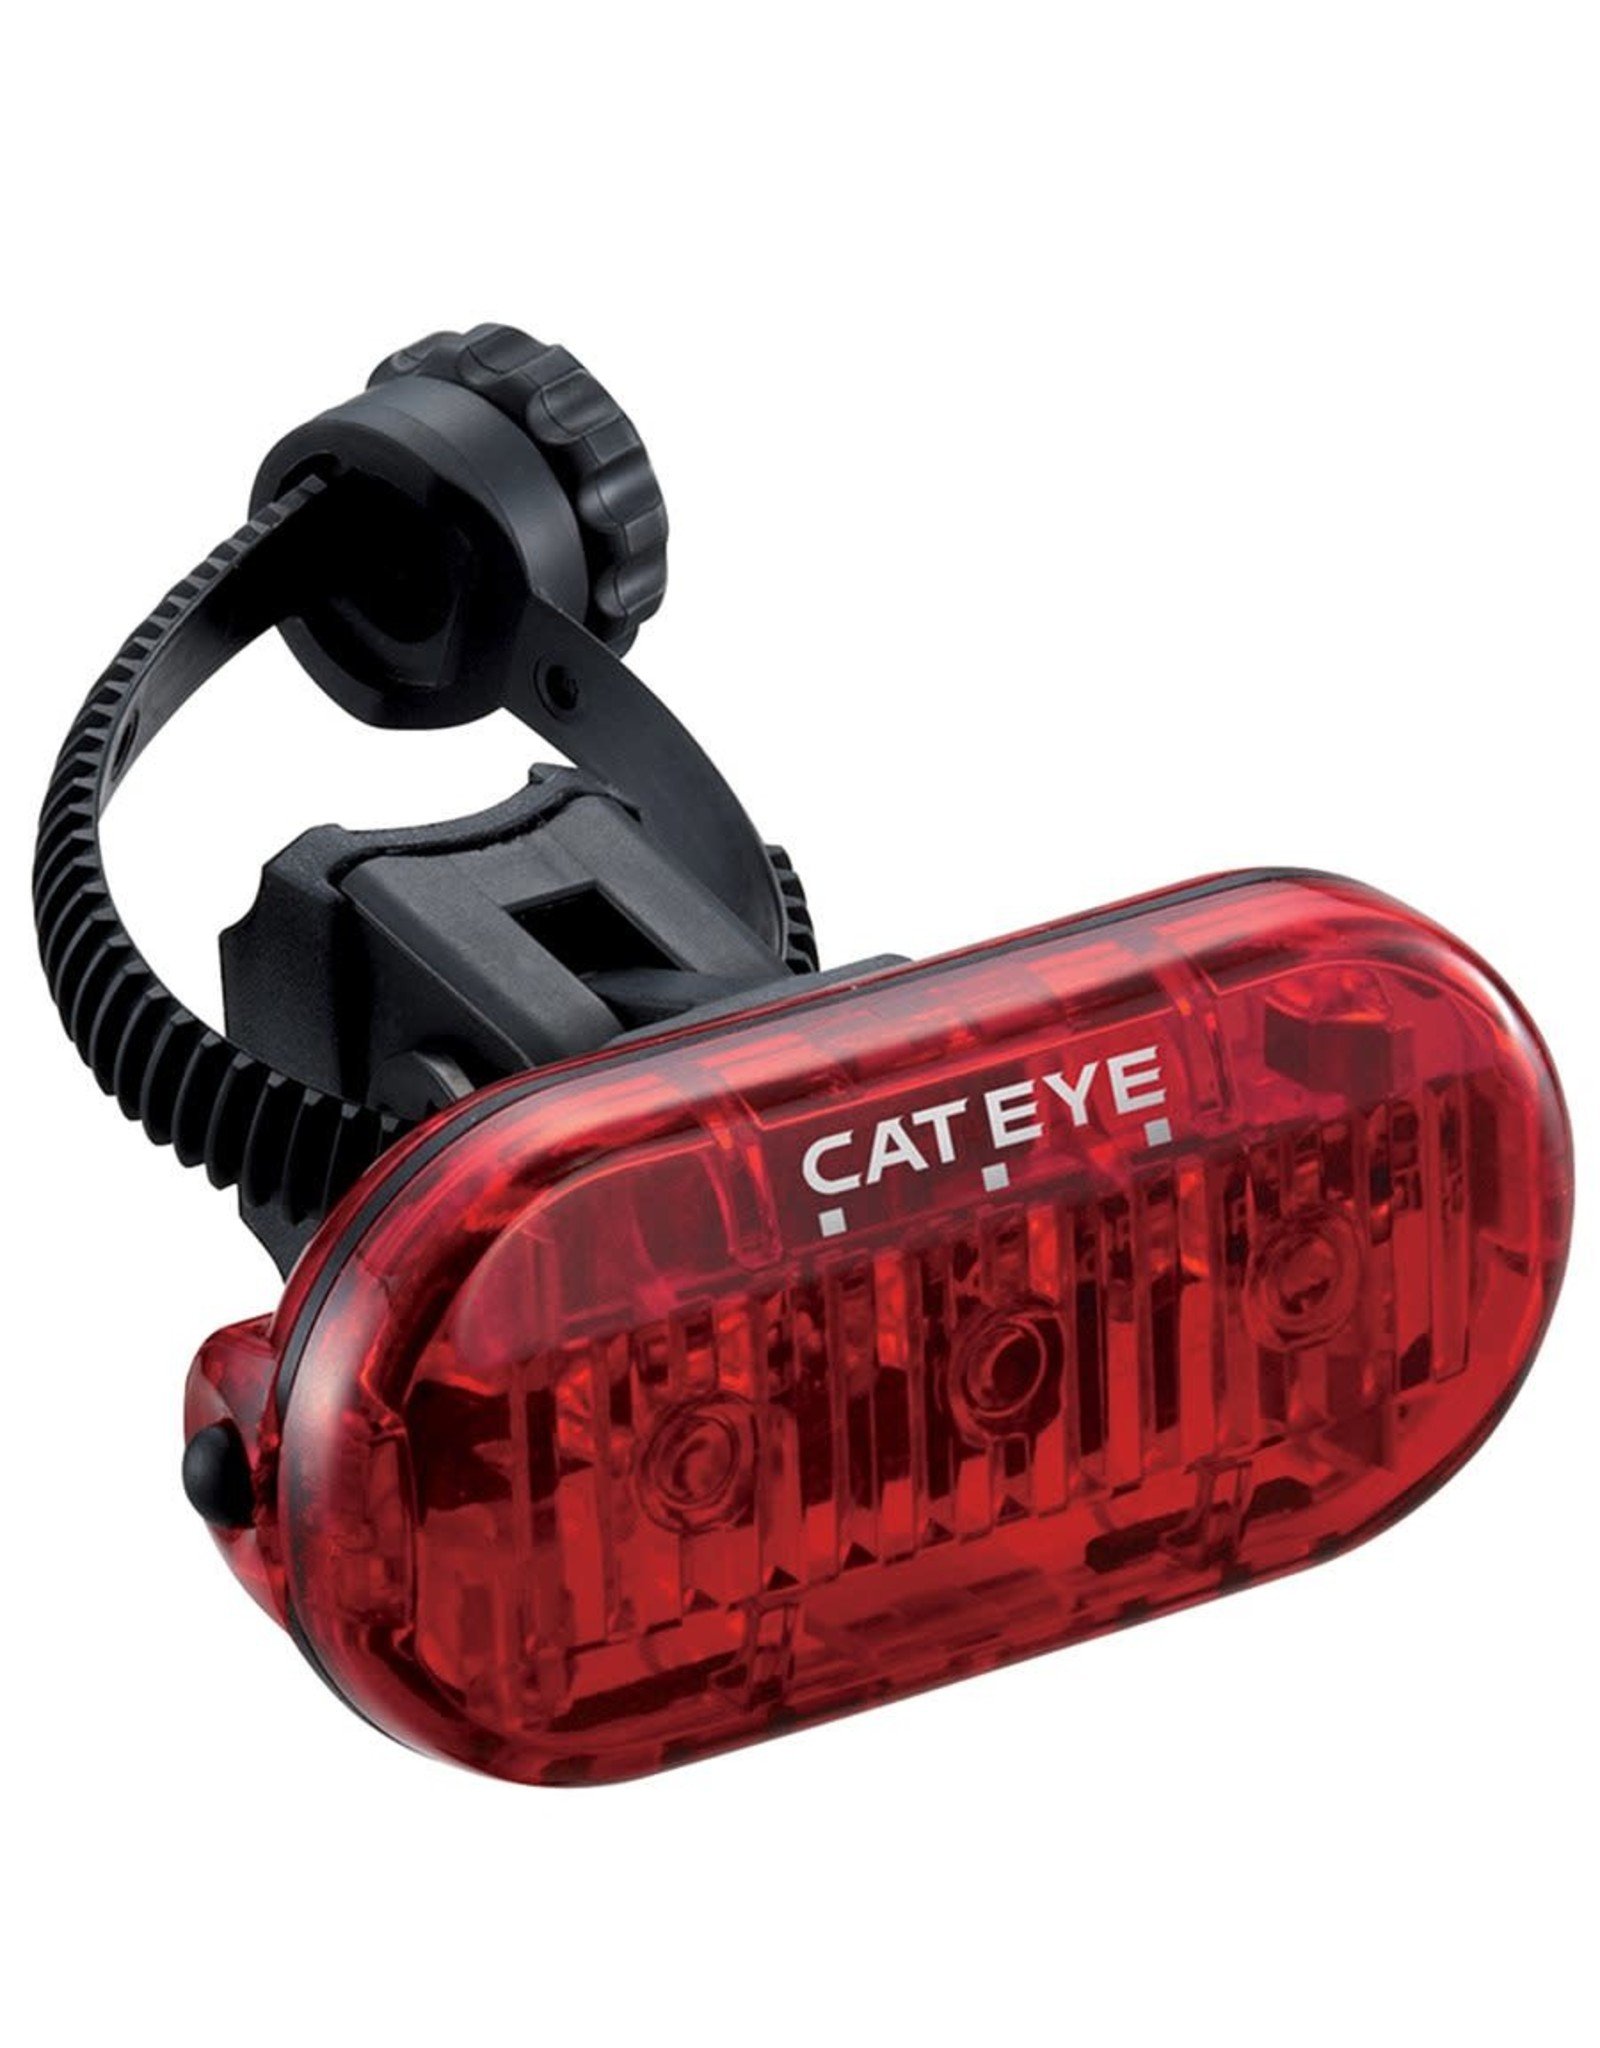 Cat Eye Rear Light CatEye Omni 3 red (3 LED) 2xAAA